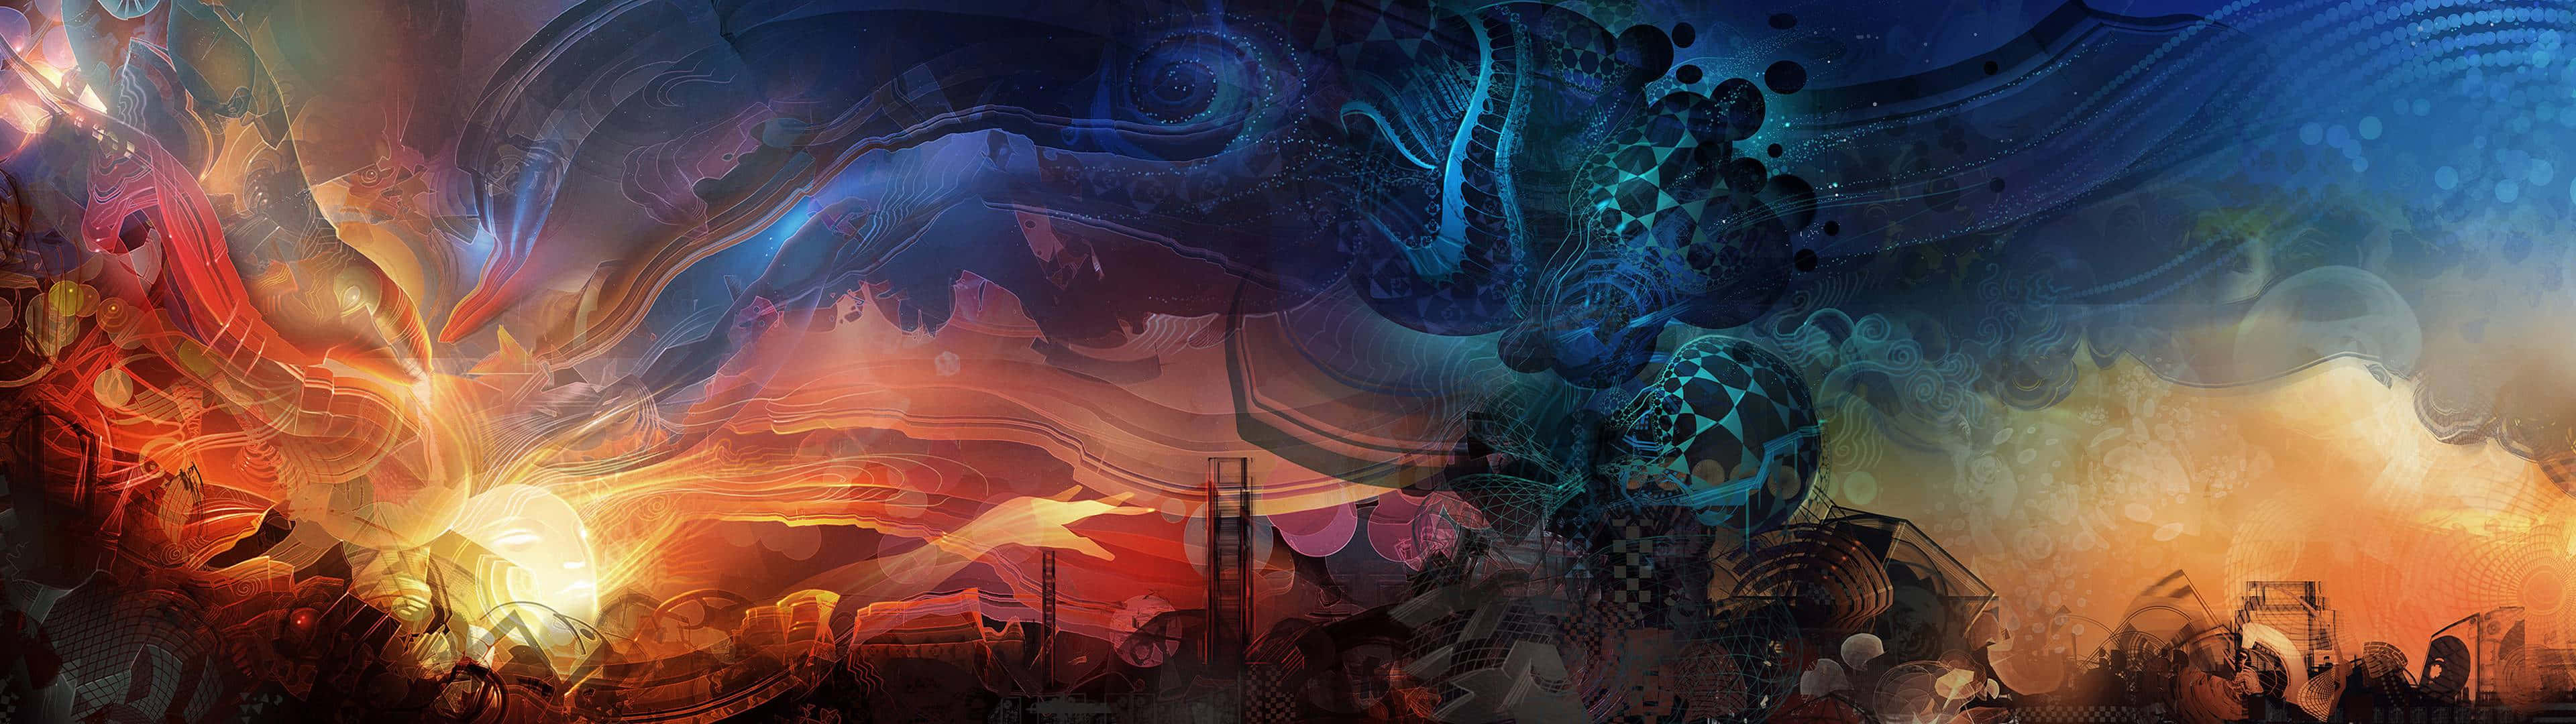 Erobertgemeinsam Den Zufälligen Summoners' Rift Mit League Of Legends Und Dual Screen Wallpaper